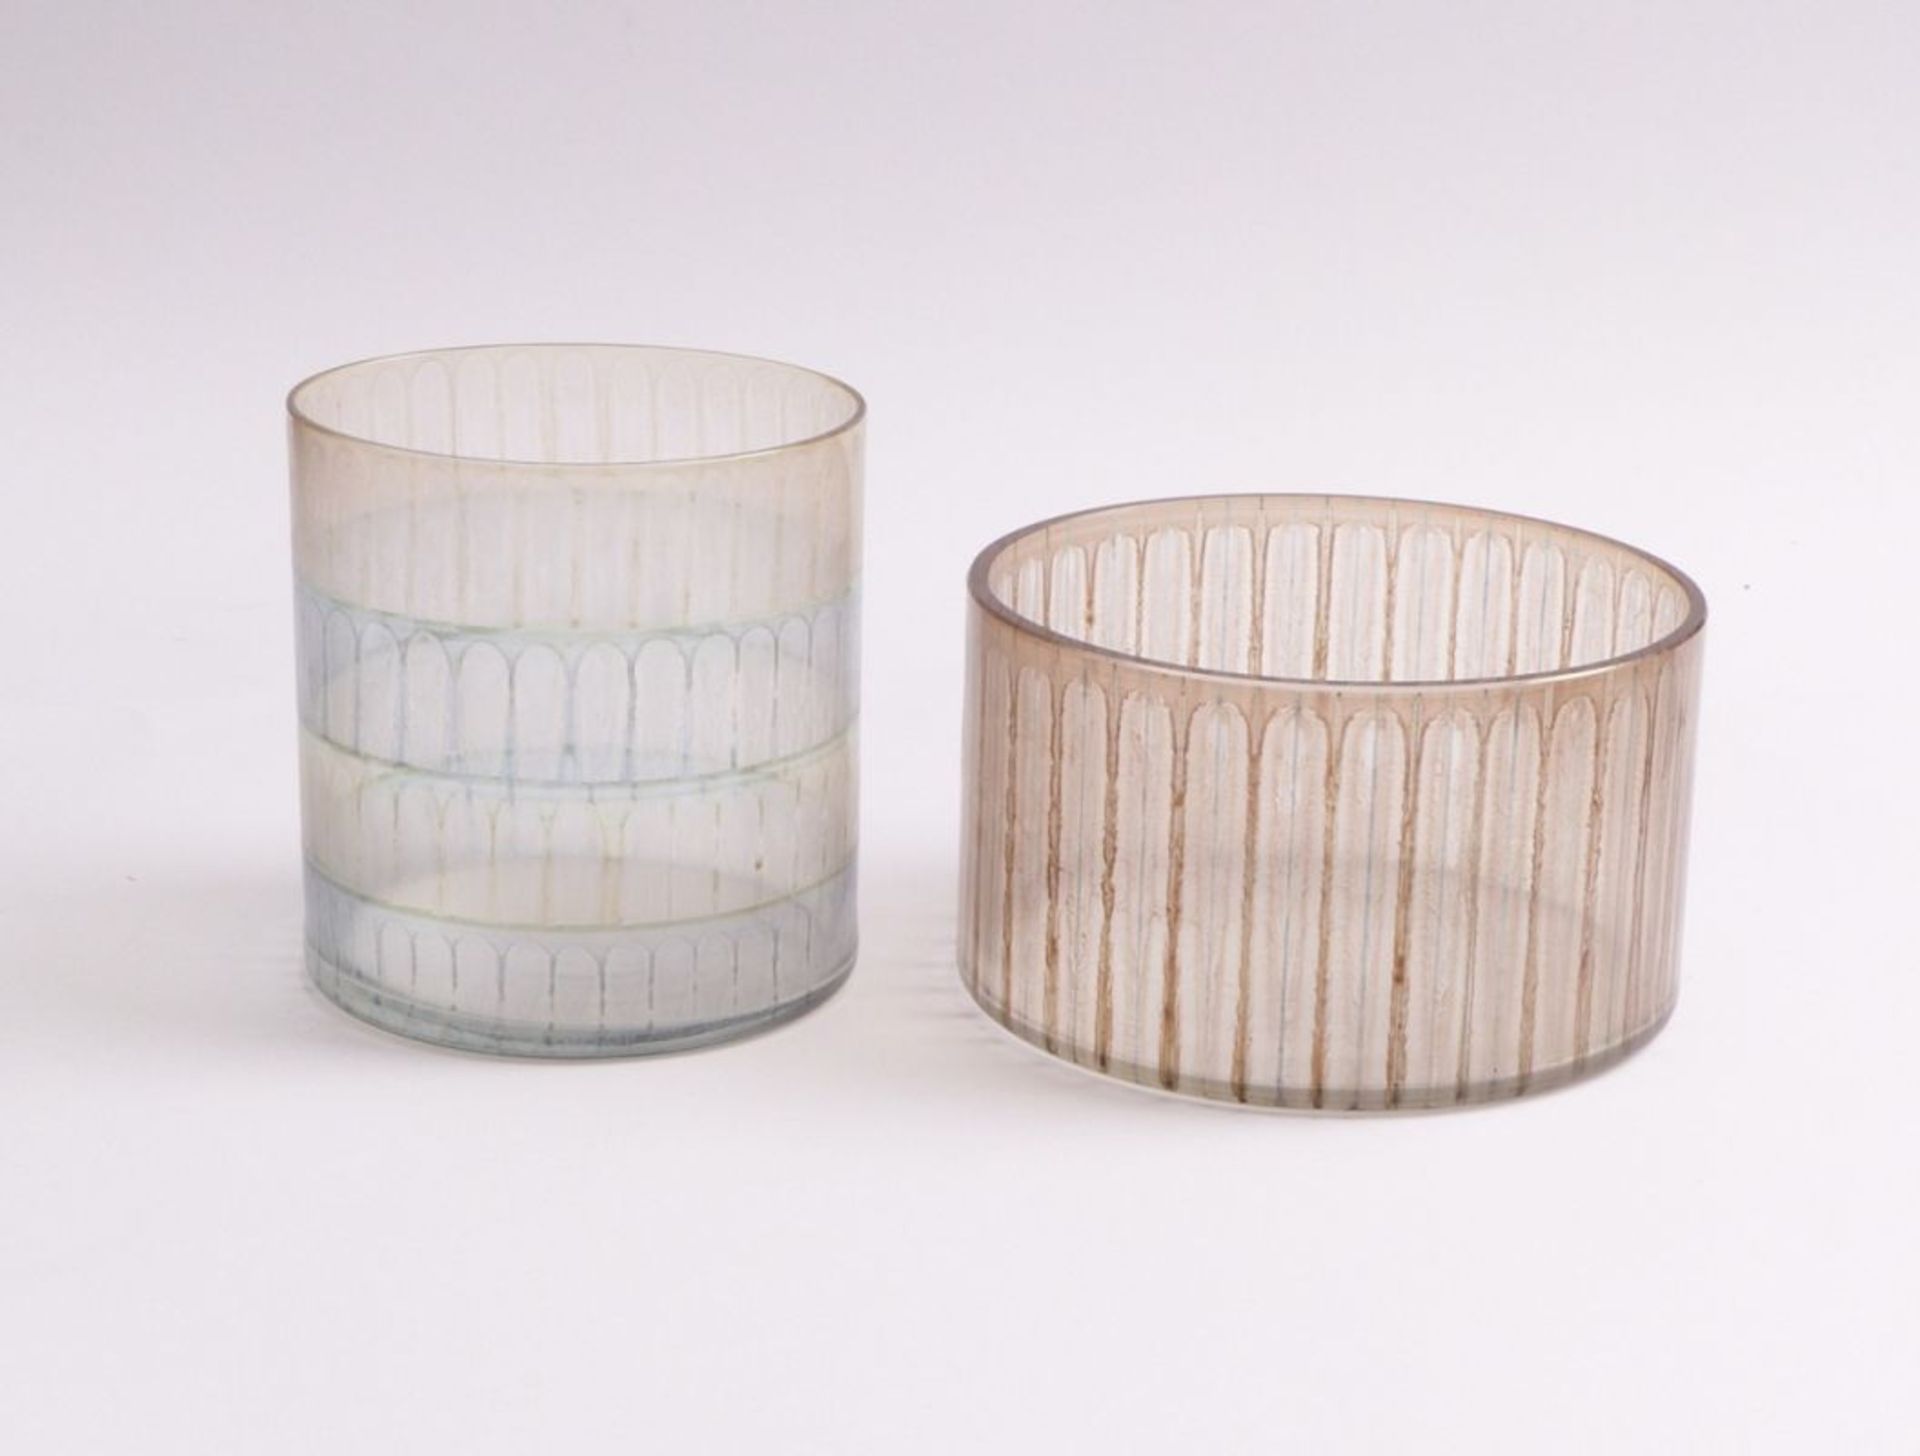 Moje-Wohlgemuth, Isgard (attributed)Two bowls(Gumbinnen 1941-2018 Hamburg) Colorless matte glass, - Image 2 of 2